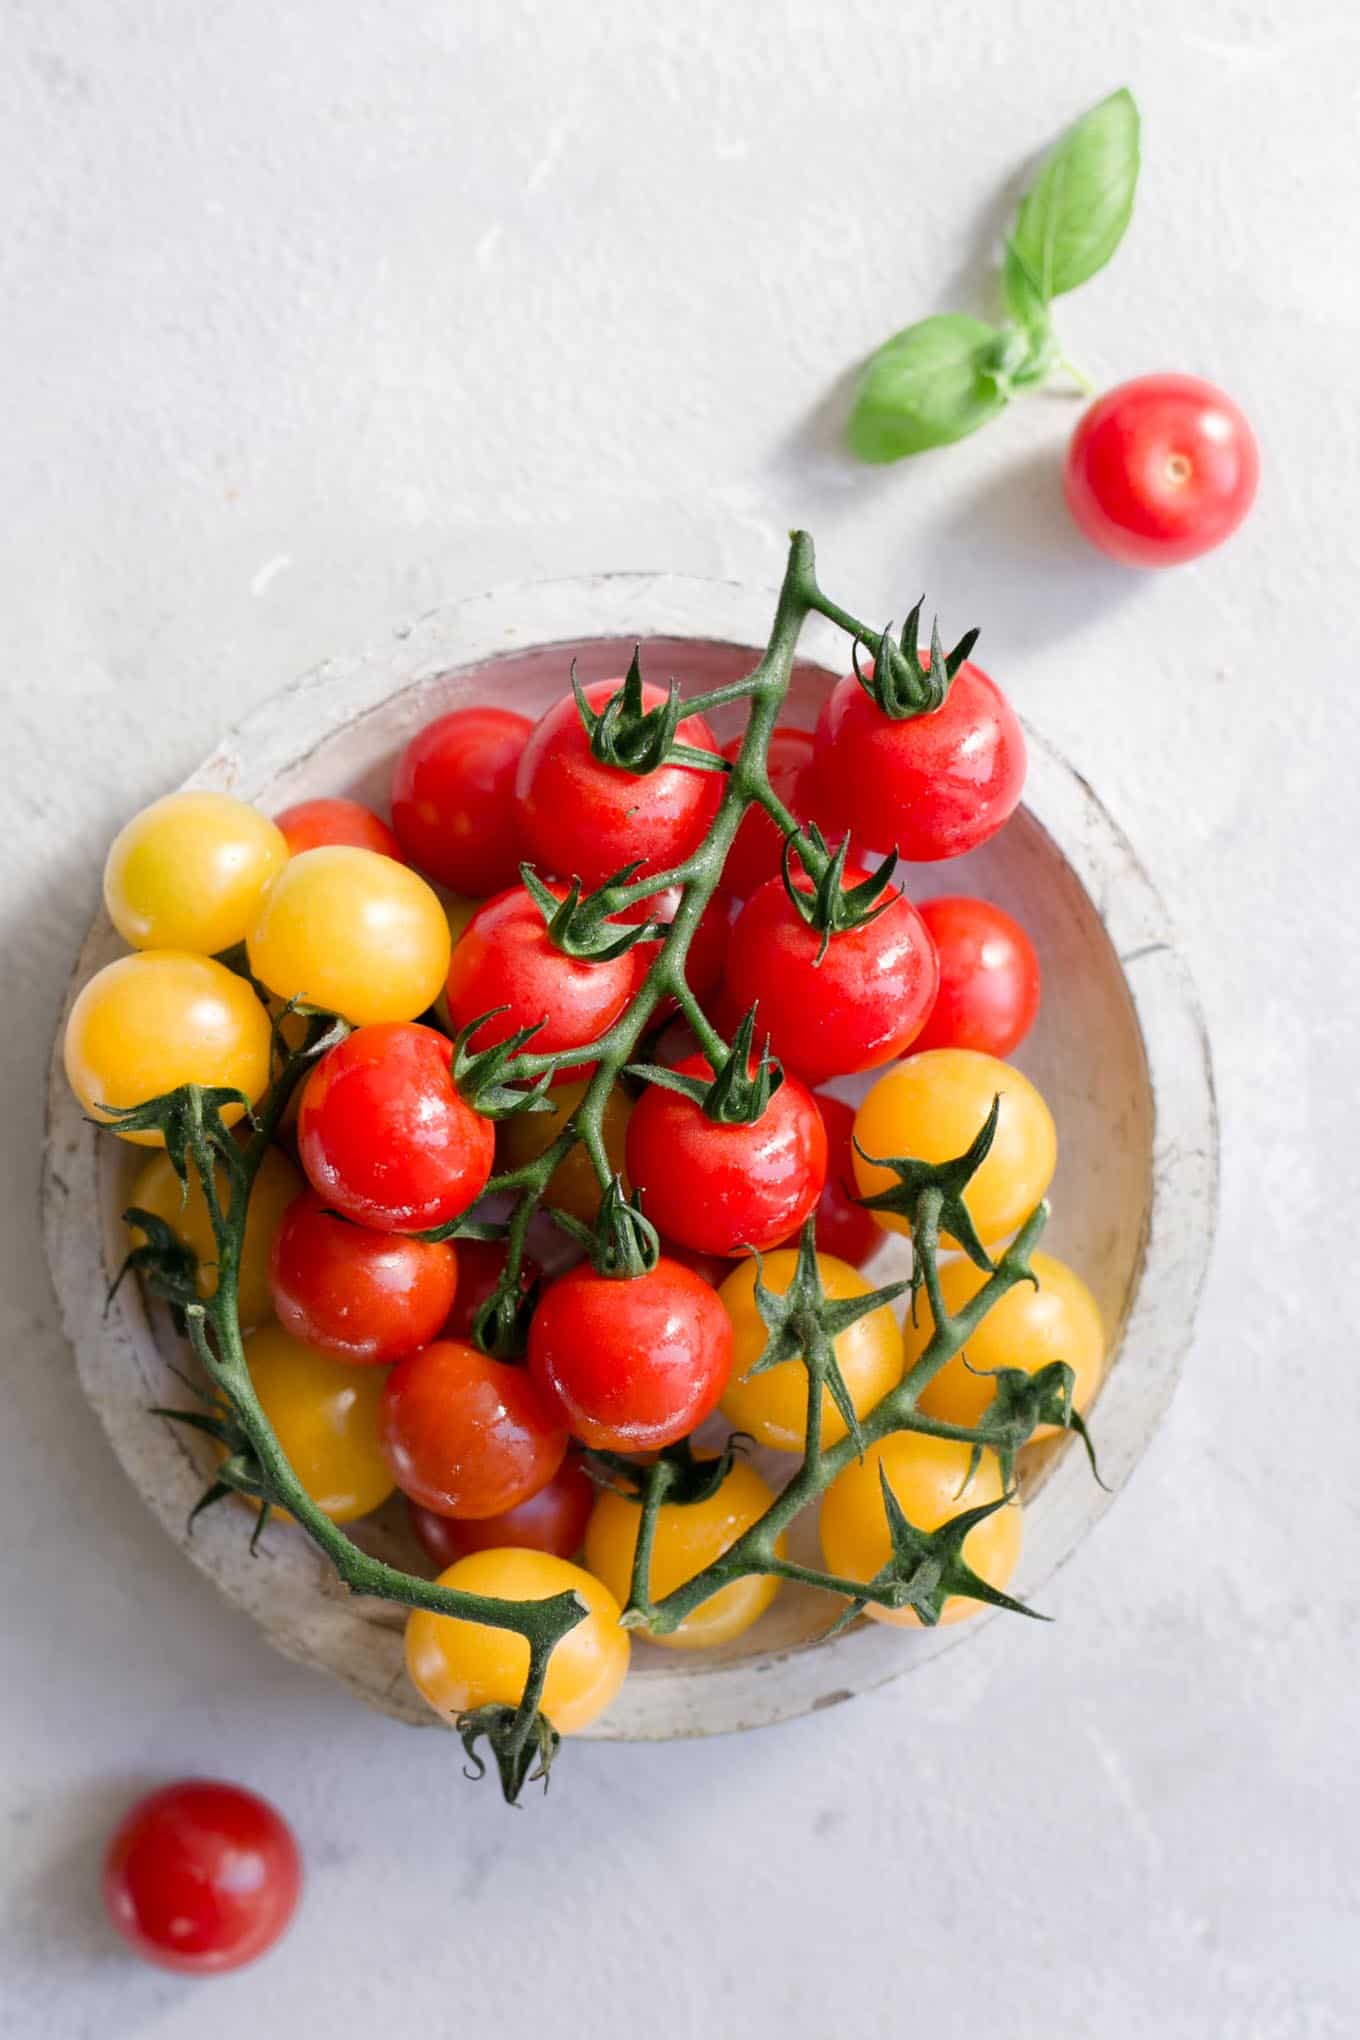 Super quick and easy pesto pasta with cherry tomatoes #vegan #healthyrecipe #veganfood | via @annabanana.co